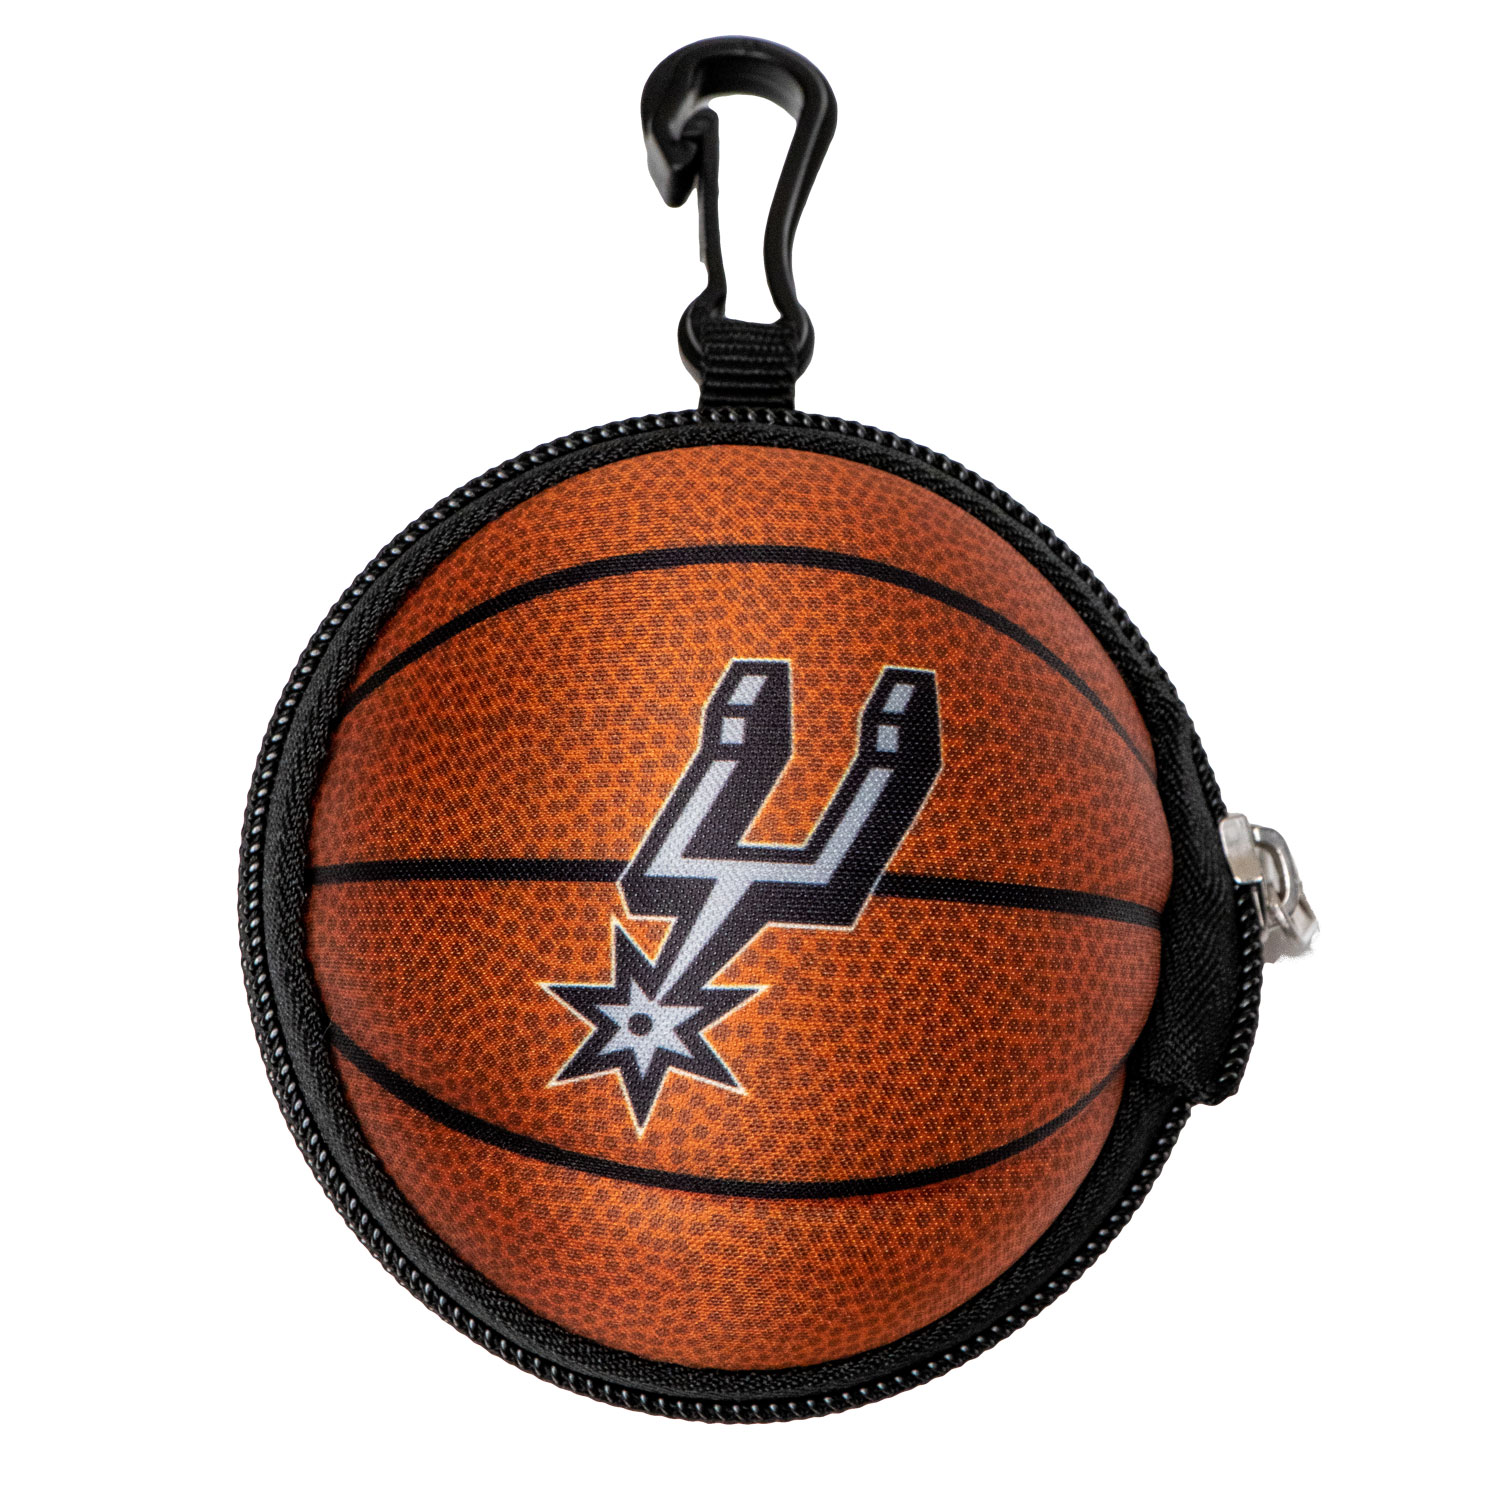 San Antonio Spurs Youth Ball Backpack Maccabi Art